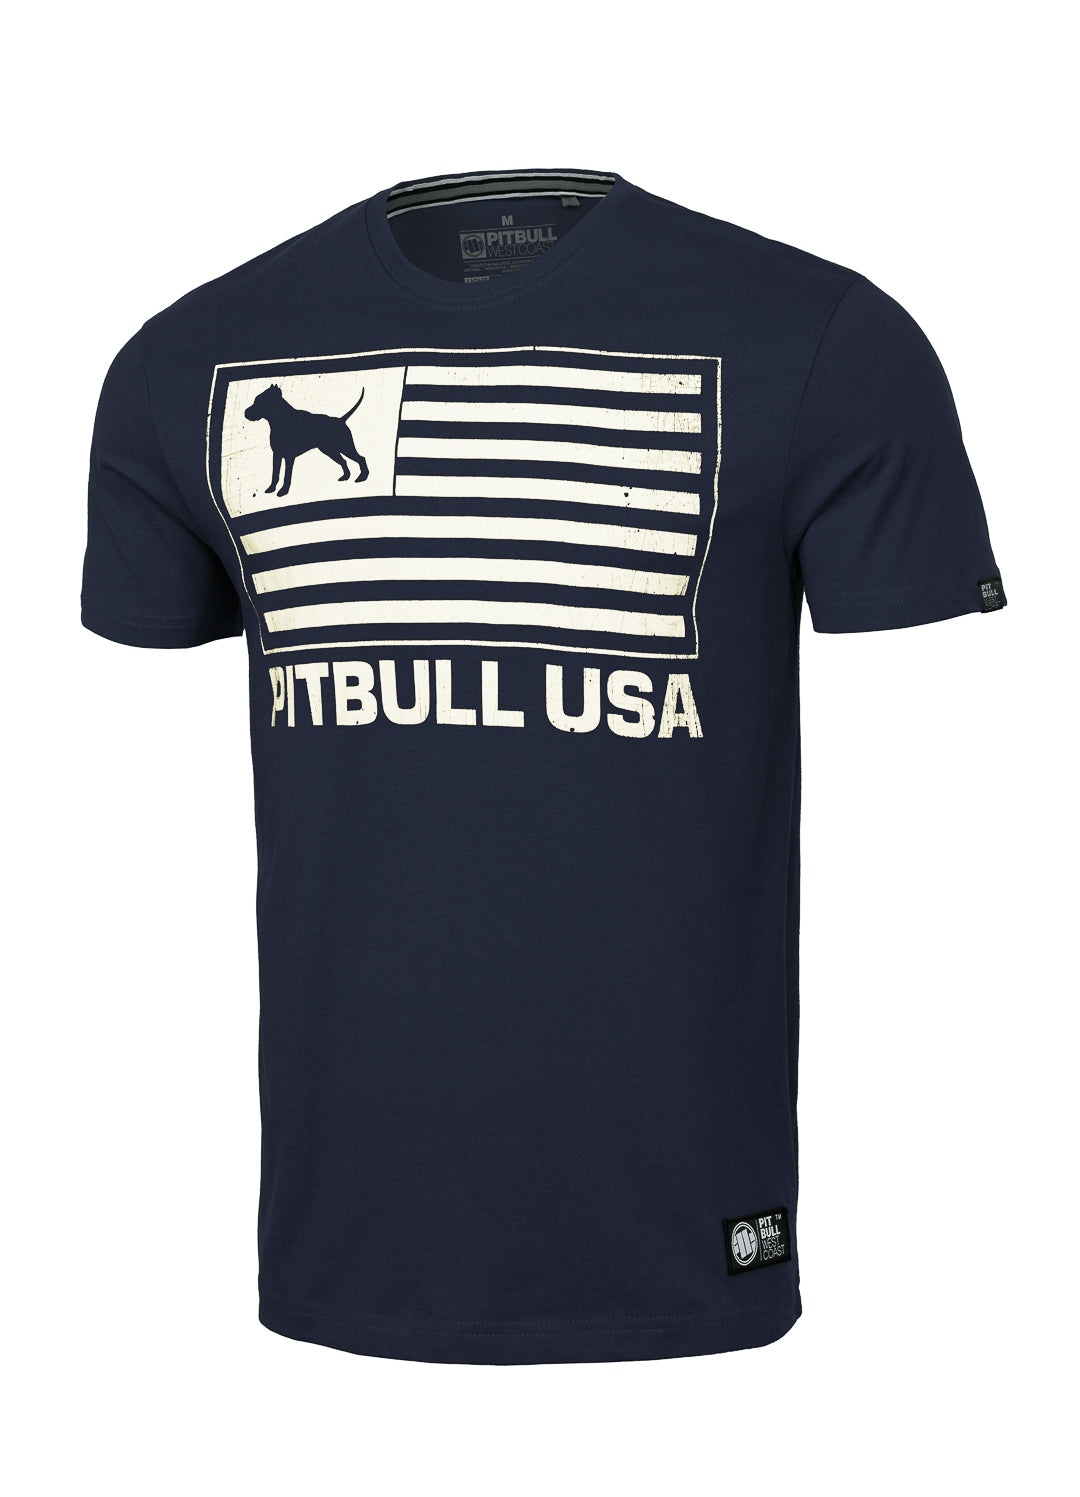 PITBULL USA Dark Navy T-shirt